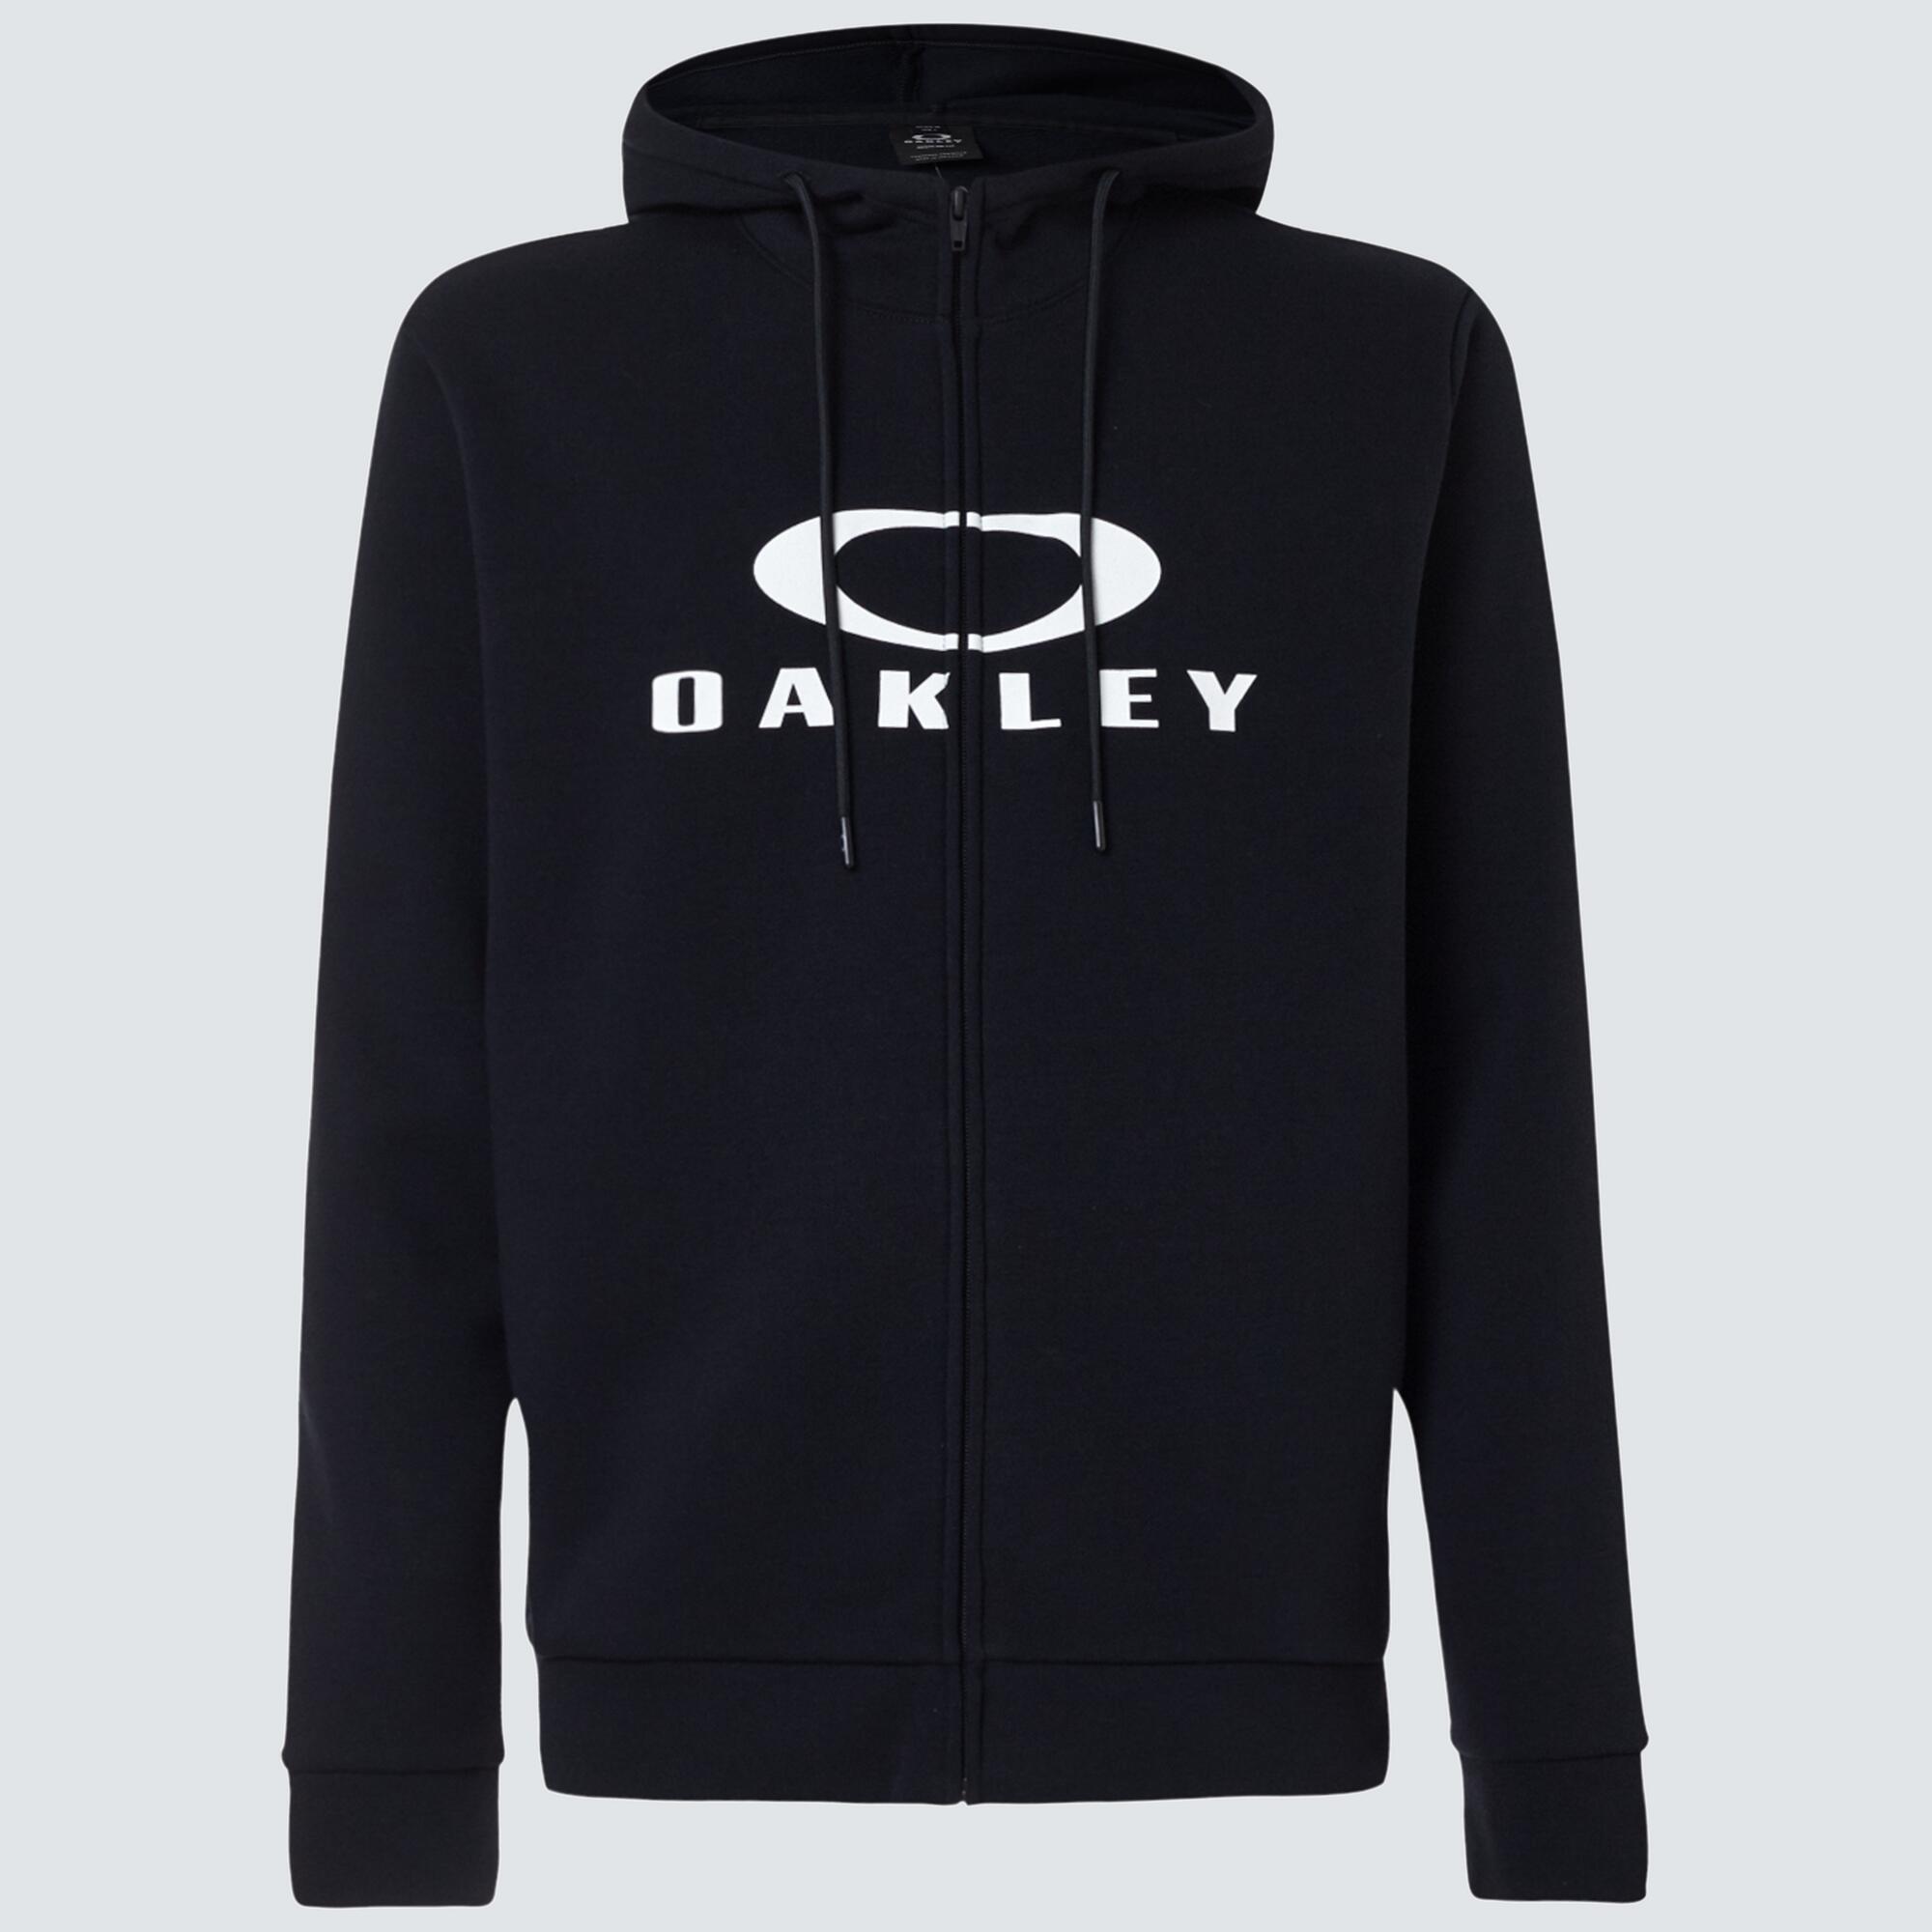 OAKLEY BARK FZ HOODIE 2.0 - Black/White